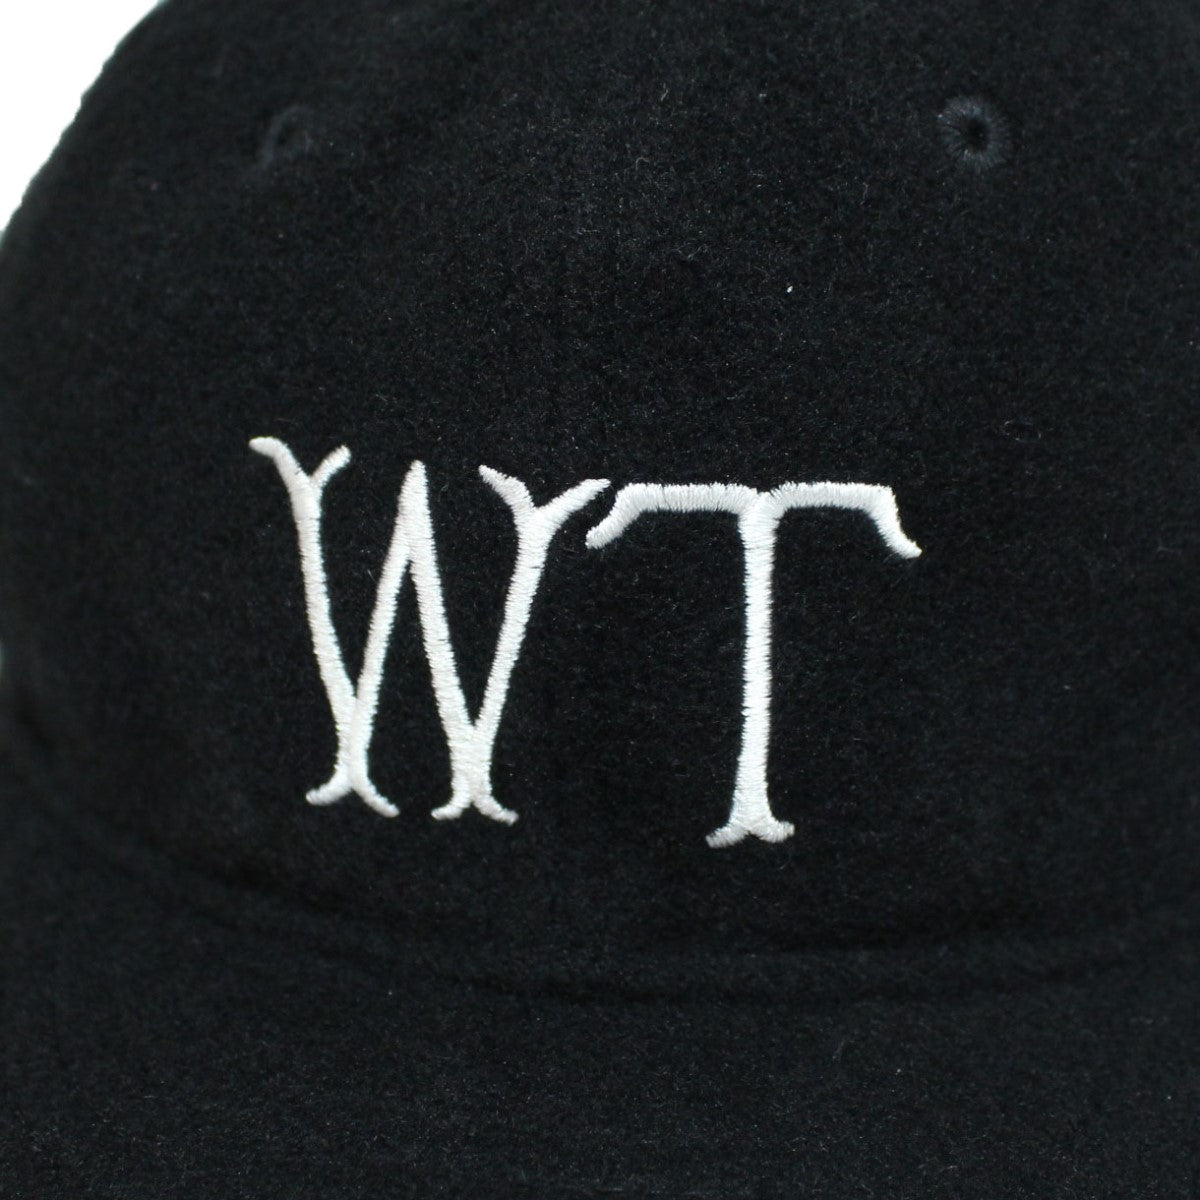 WTAPS(ダブルタップス) 23AWキャップ 帽子T-6M 05 CAP WOPL． MOSSER 